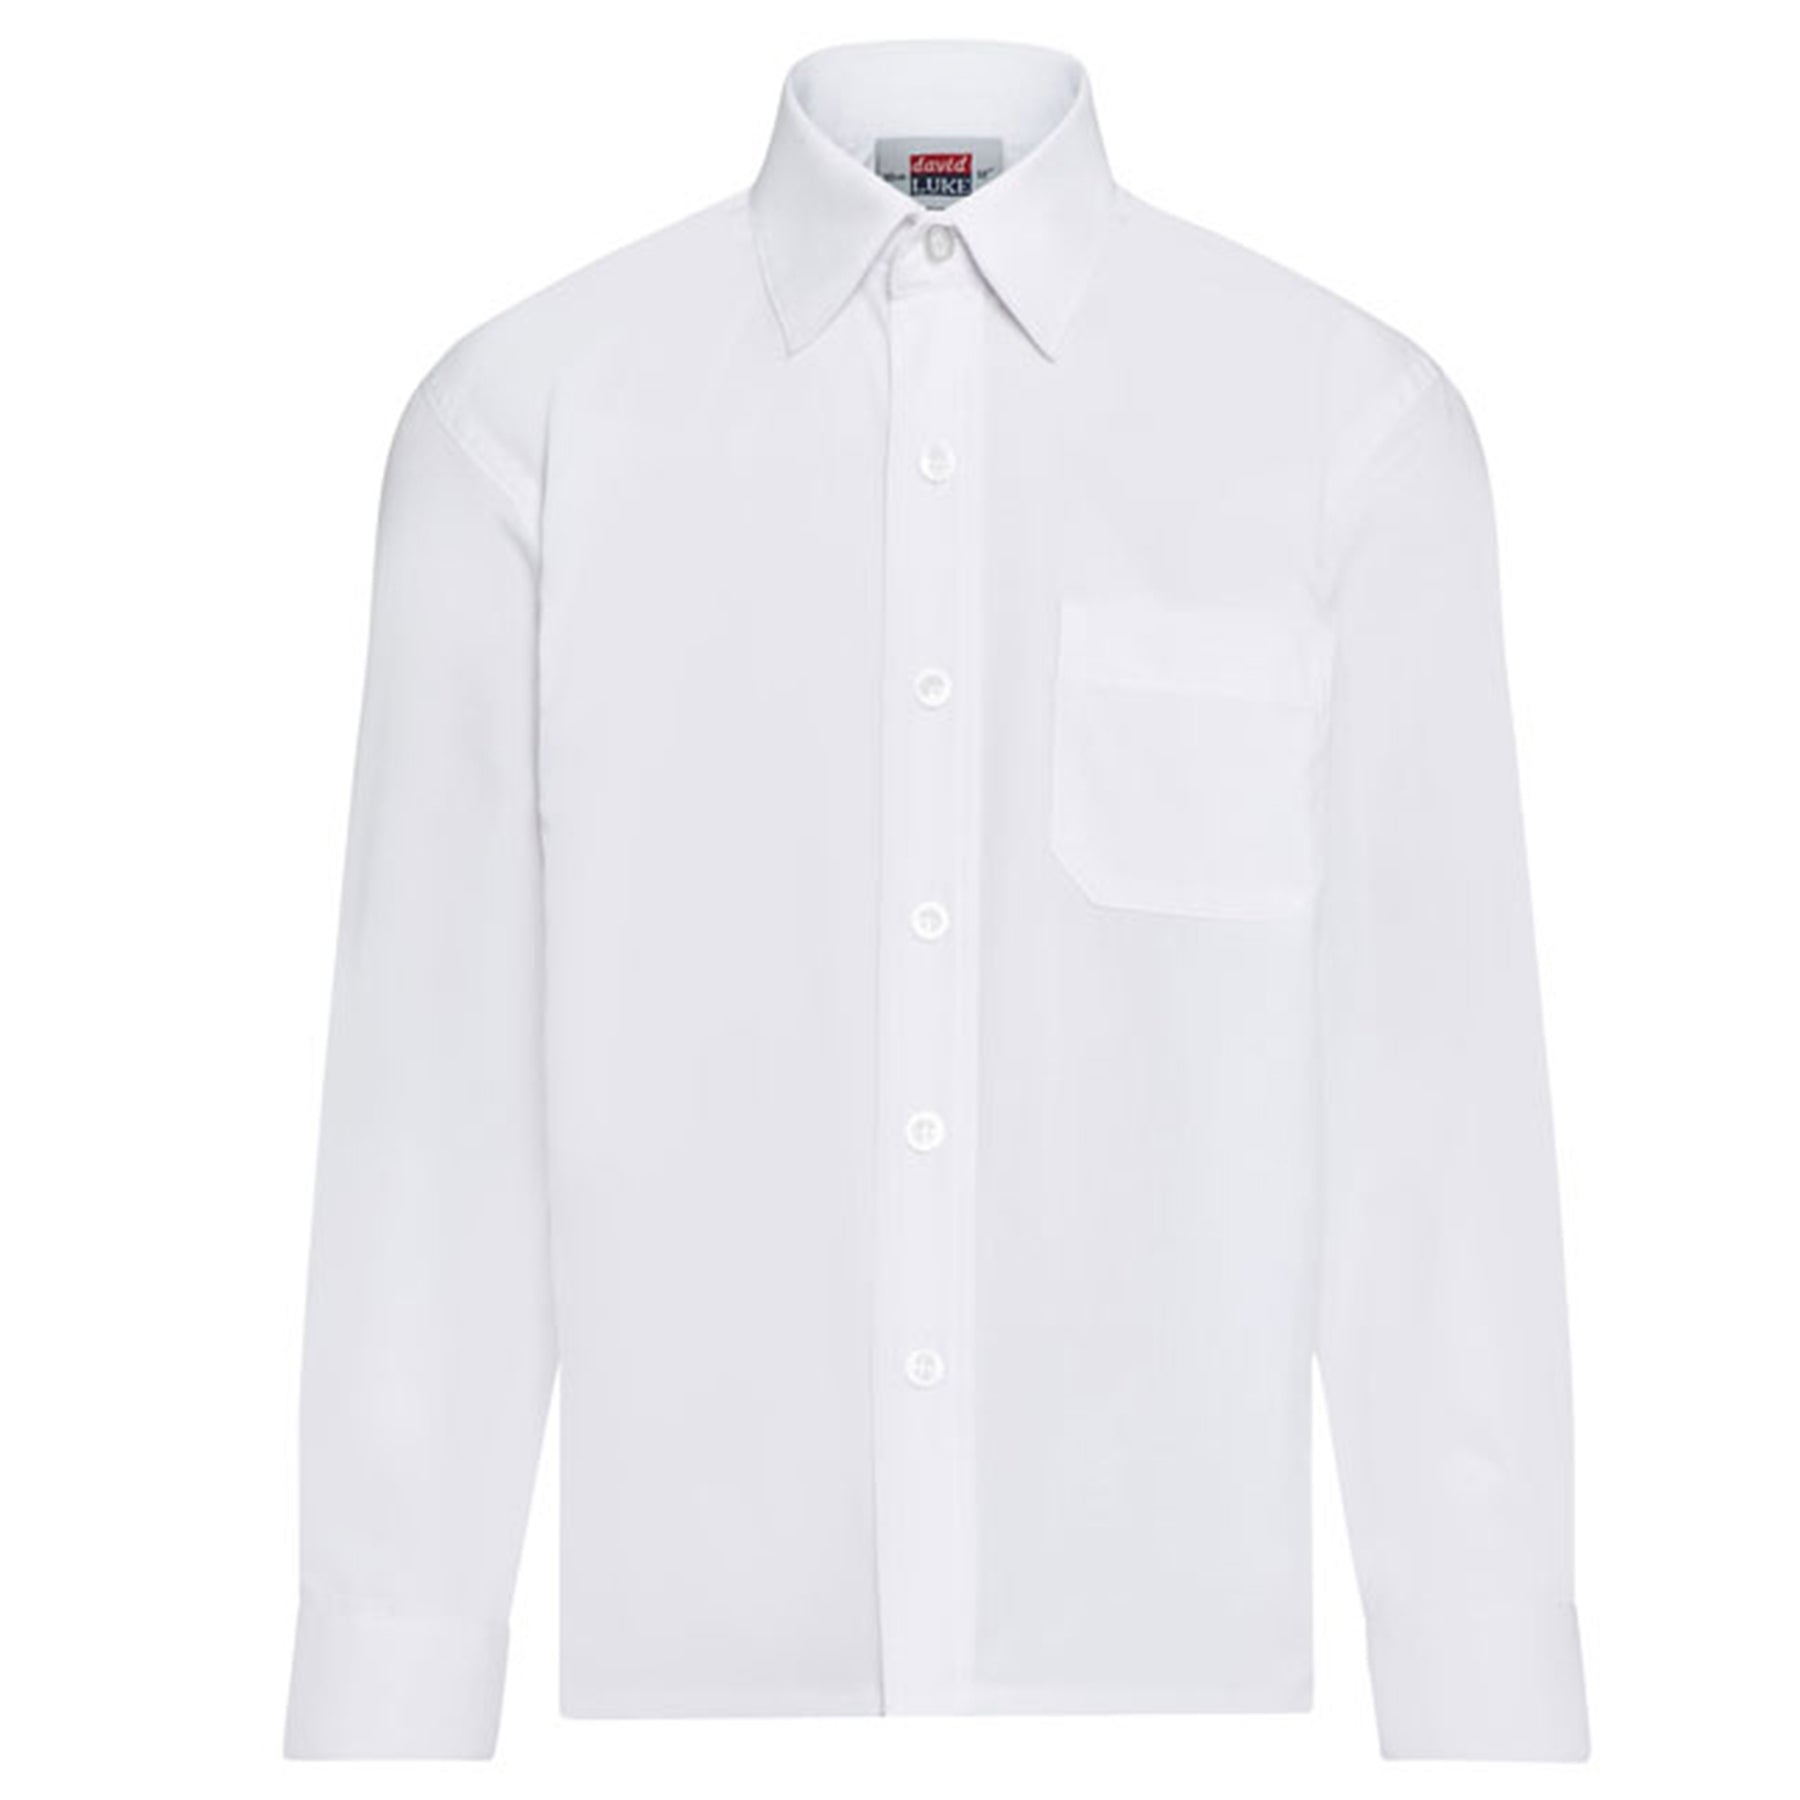 Boys Long Sleeve Shirt (Twin Pack): White